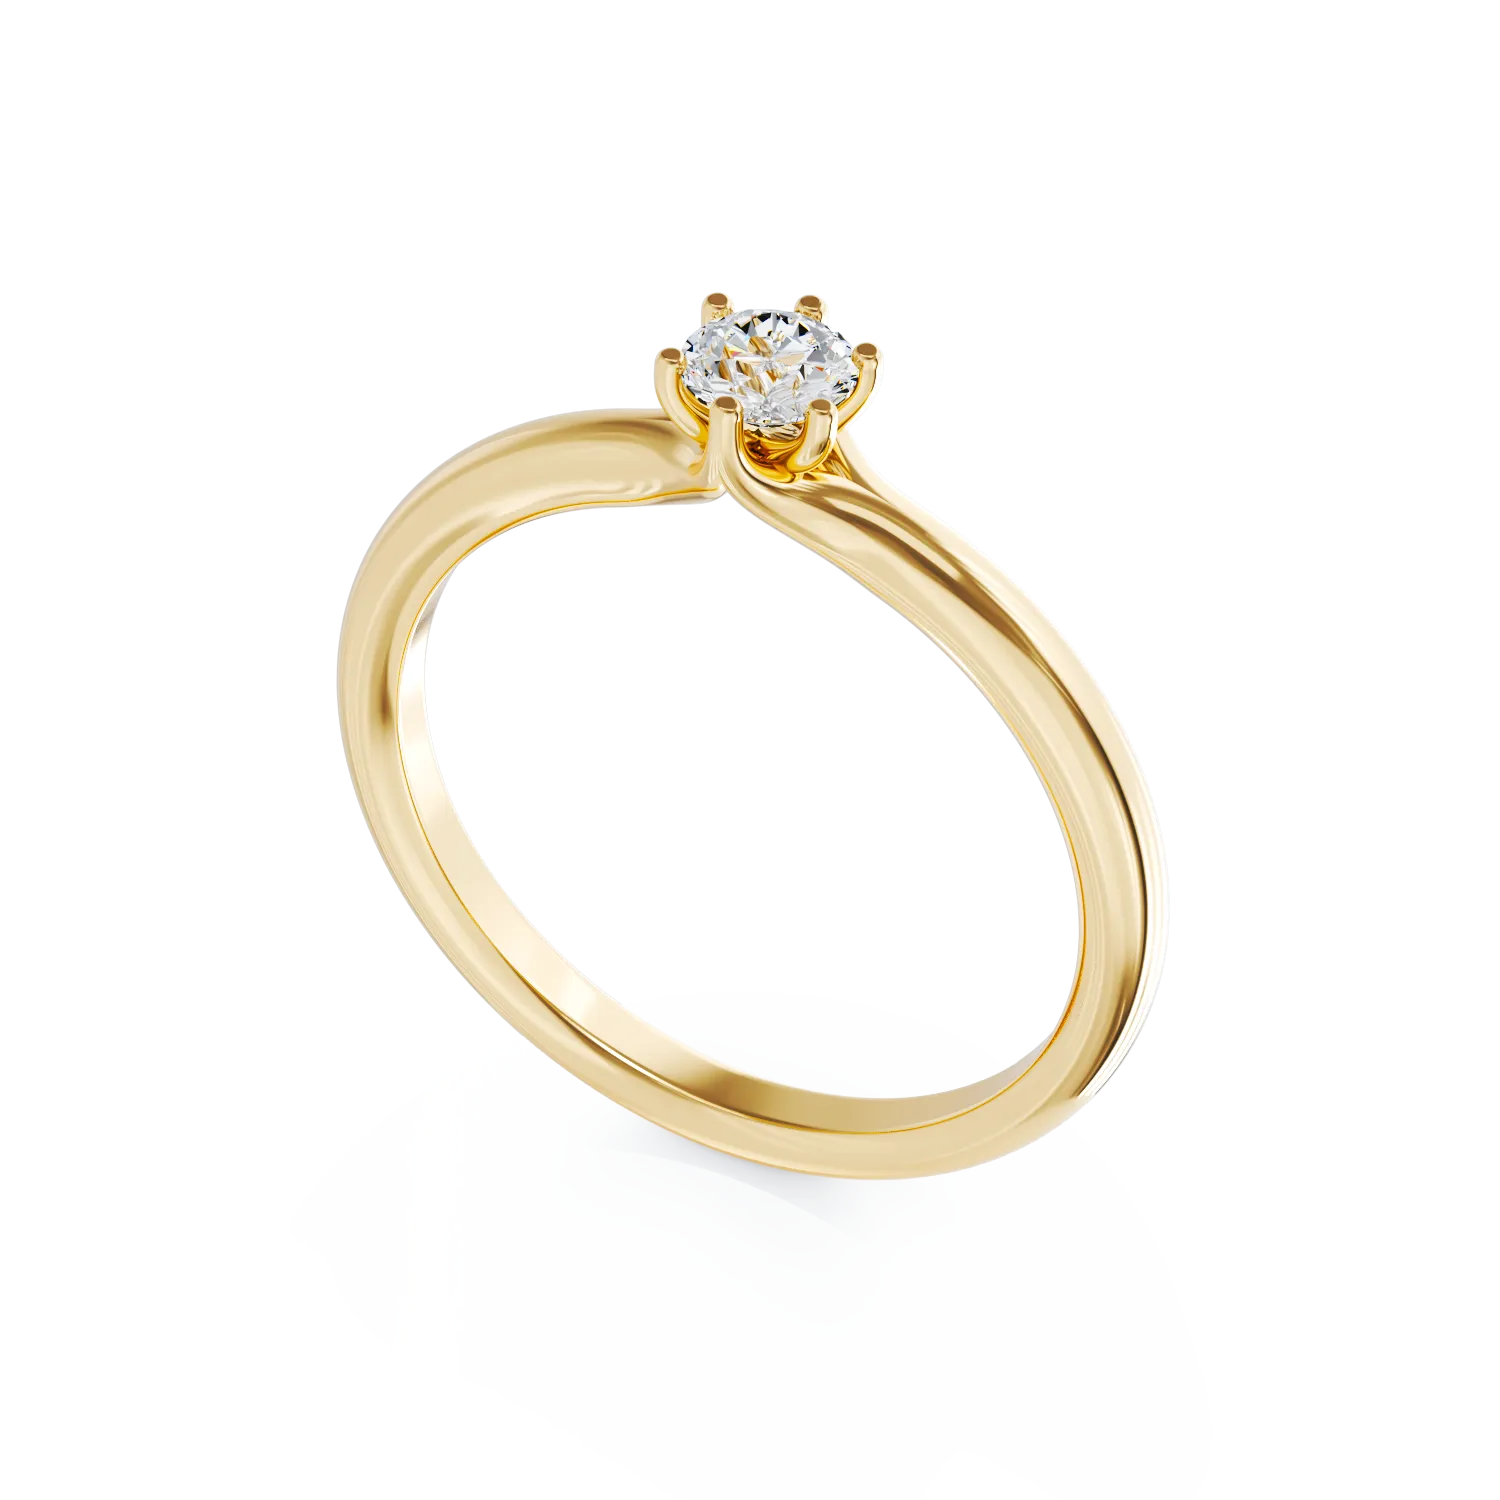 Inel de logodna din aur galben de 18K cu un diamant solitaire de 0.3ct